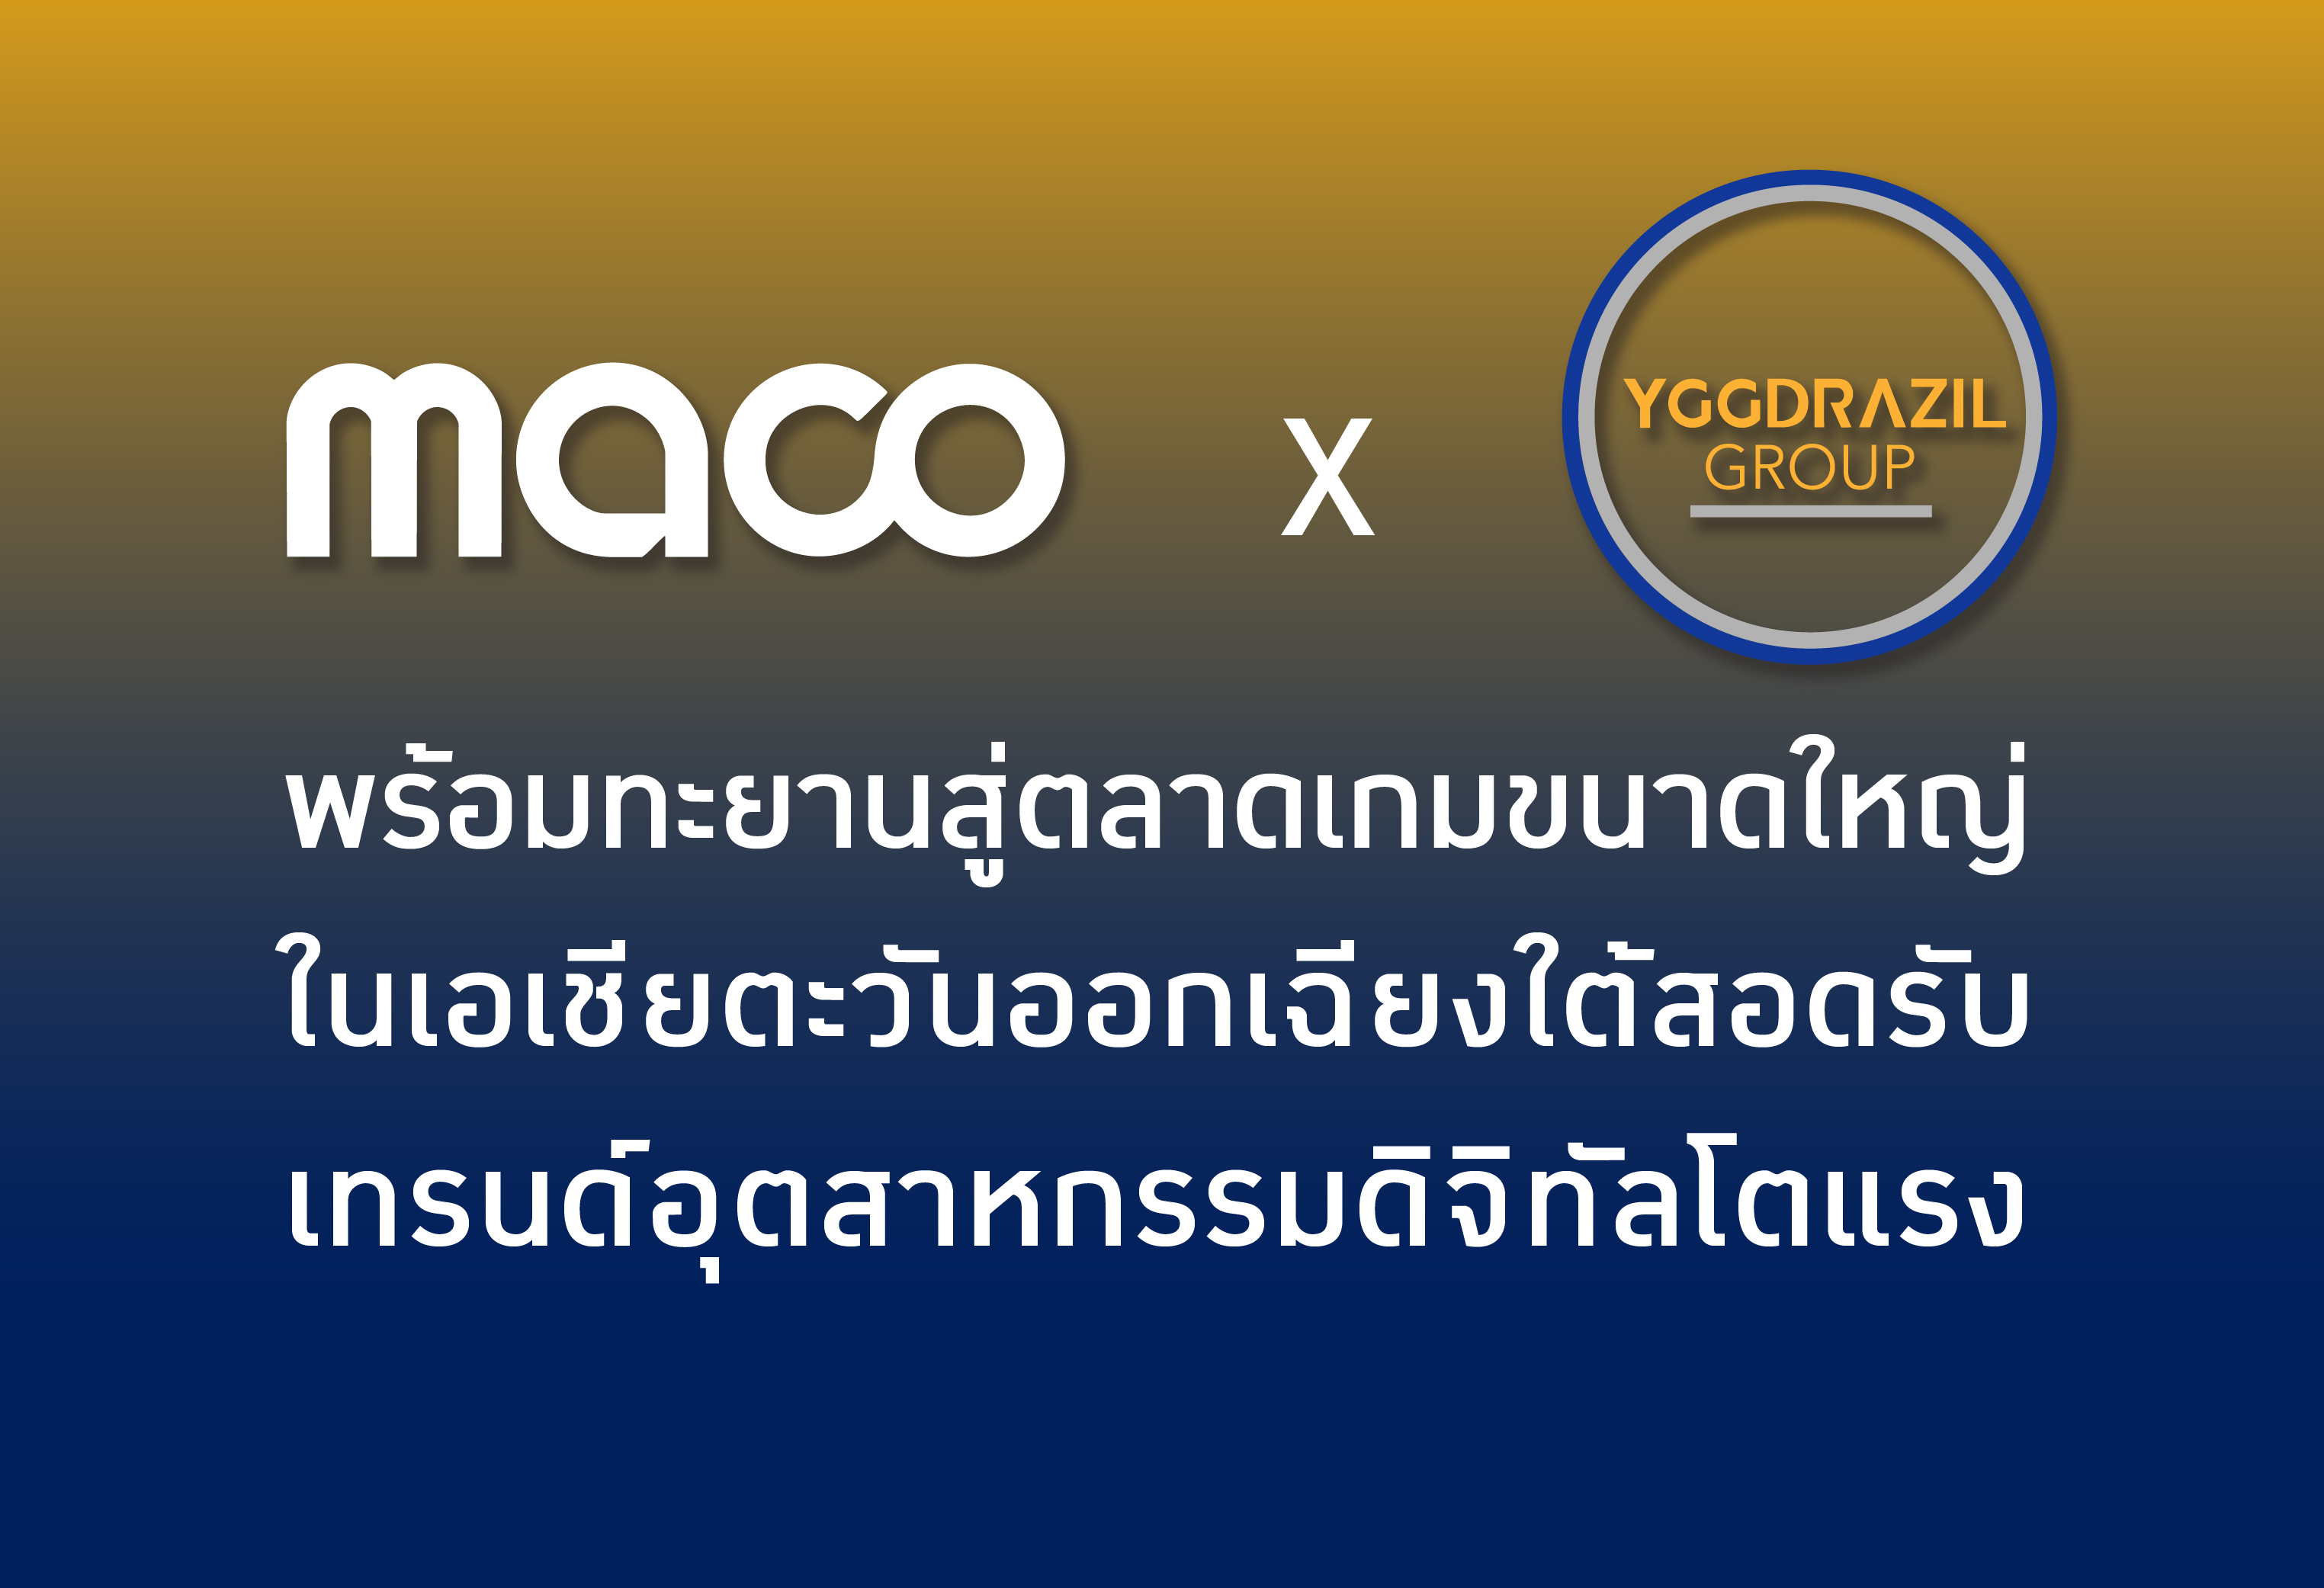 MACO จับมือ YGG พร้อมทะยานสู่ตลาดเกมขนาดใหญ่ในเอเชียตะวันออกเฉียงใต้ สอดรับเทรนด์อุตสาหกรรมดิจิทัลโตแรง